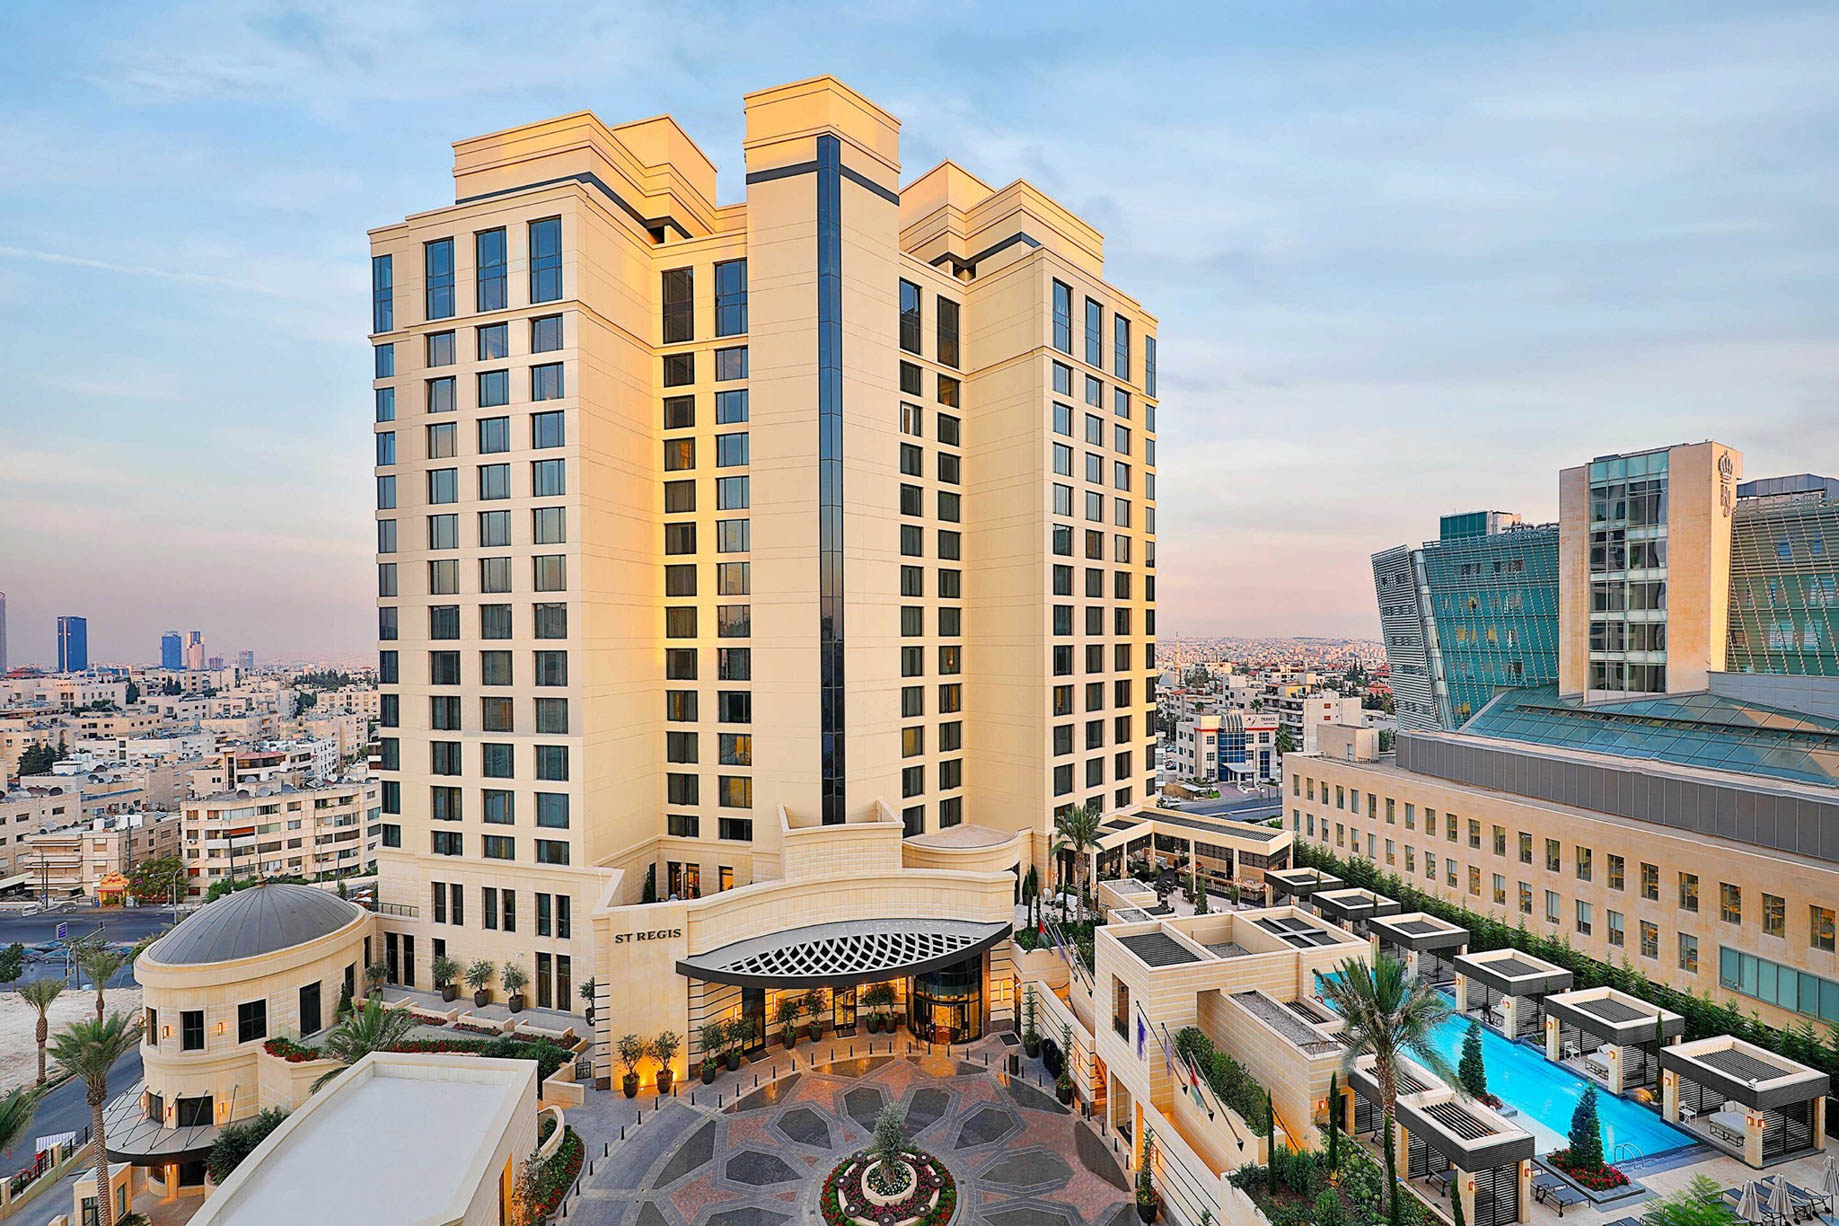 The St. Regis Amman Hotel – Amman, Jordan – Hotel Exterior Entrance View